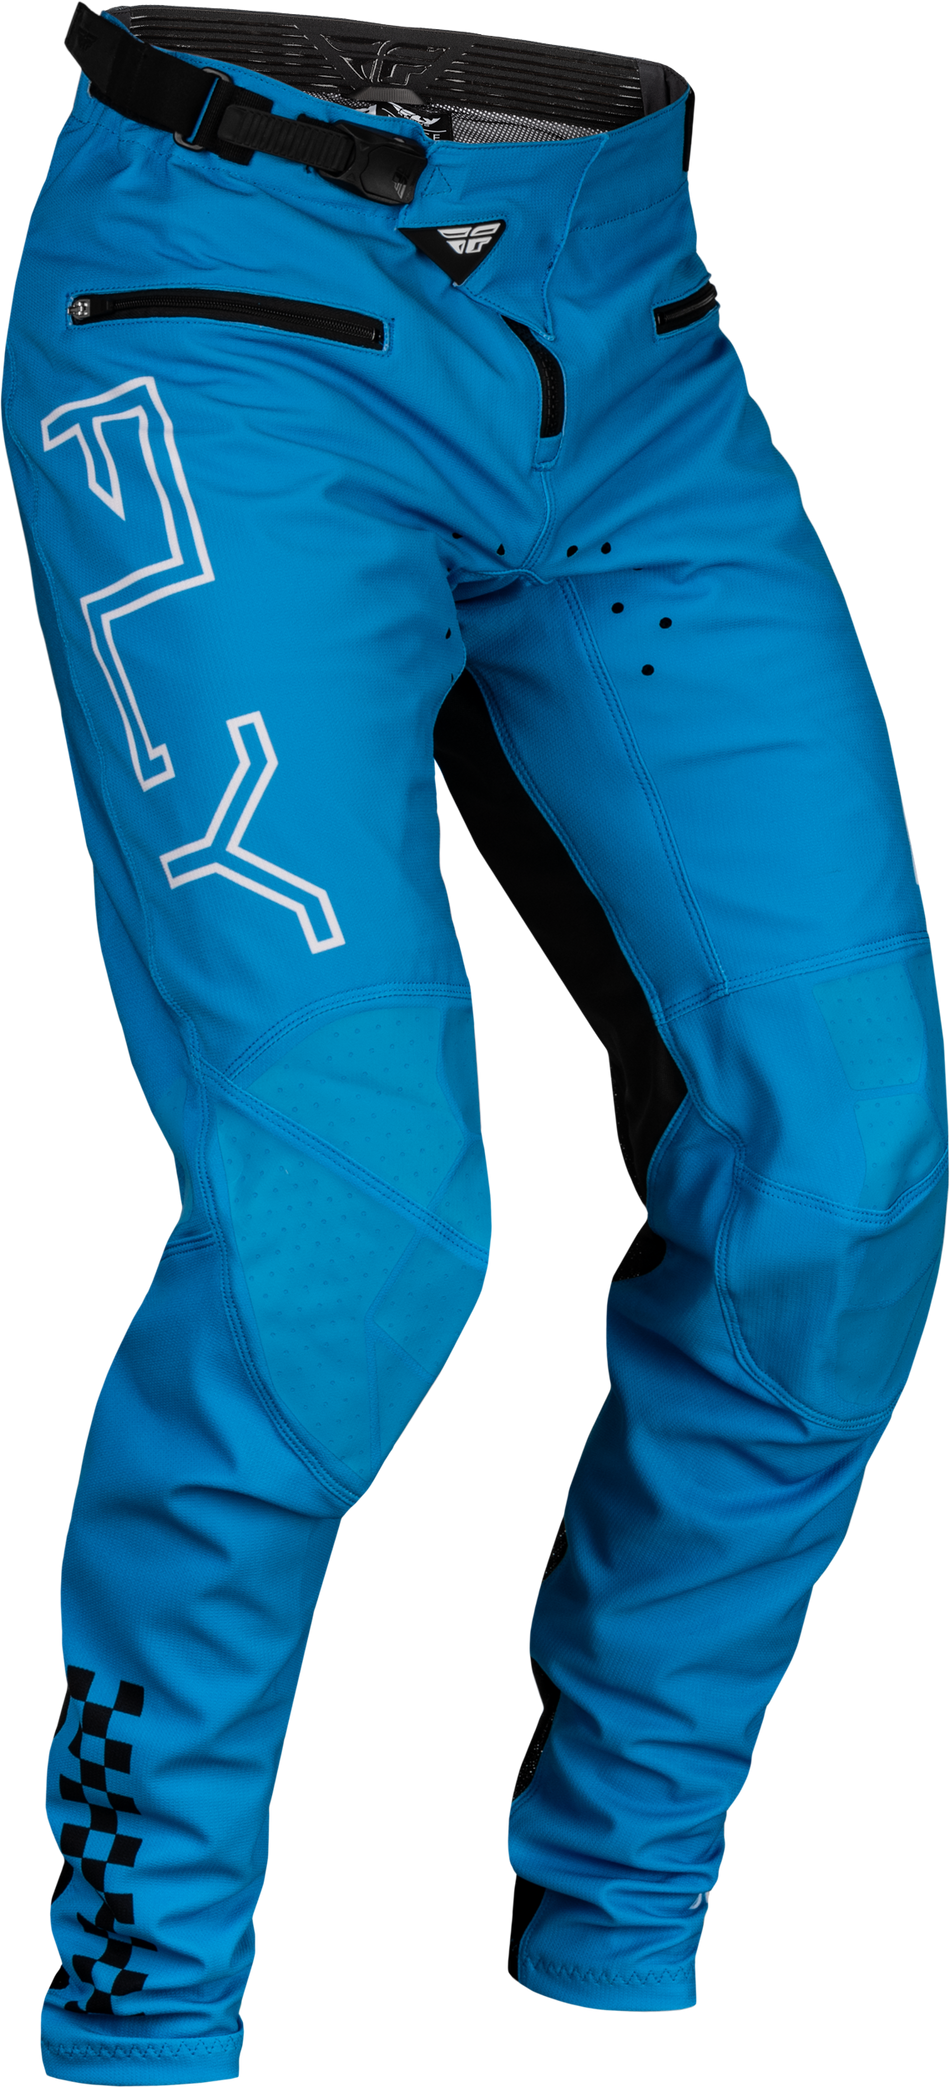 FLY RACING Rayce Bicycle Pants Blue Sz 38 377-06238